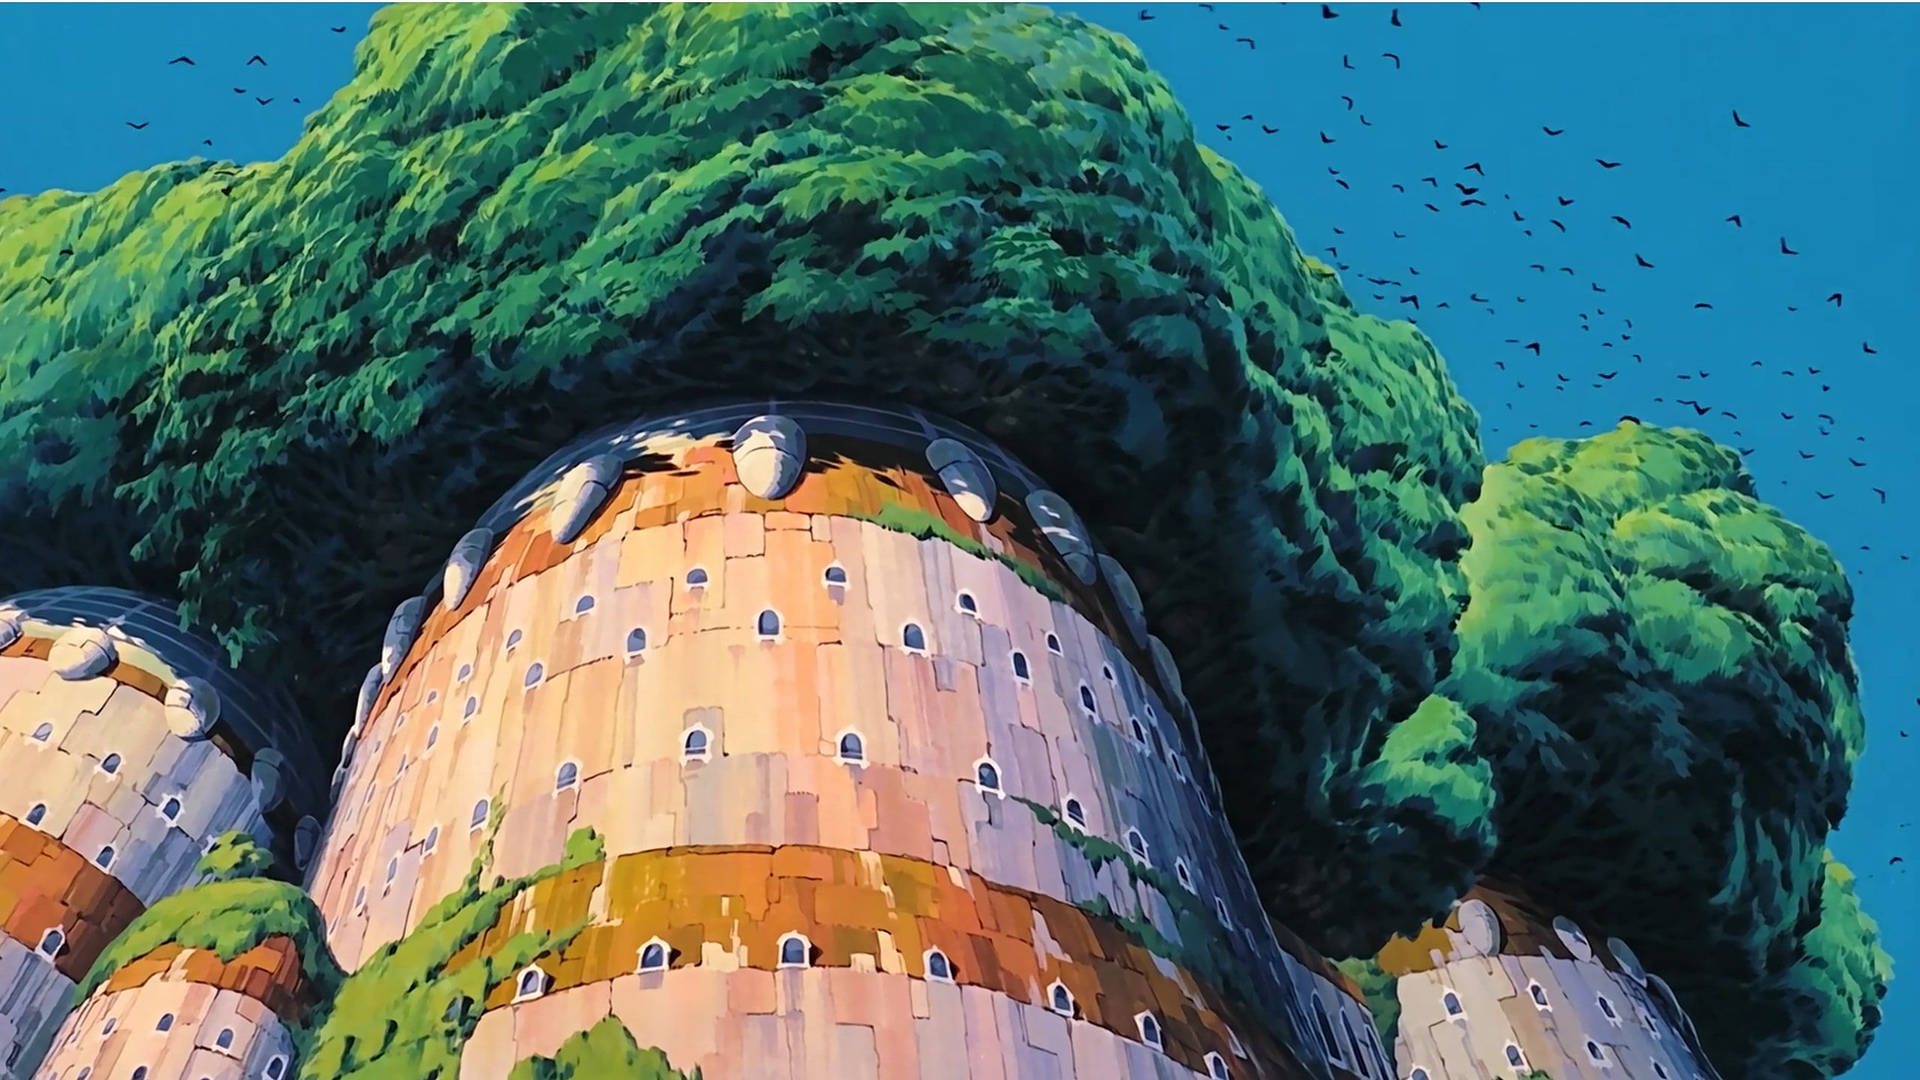 Laputa Castle Studio Ghibli Background